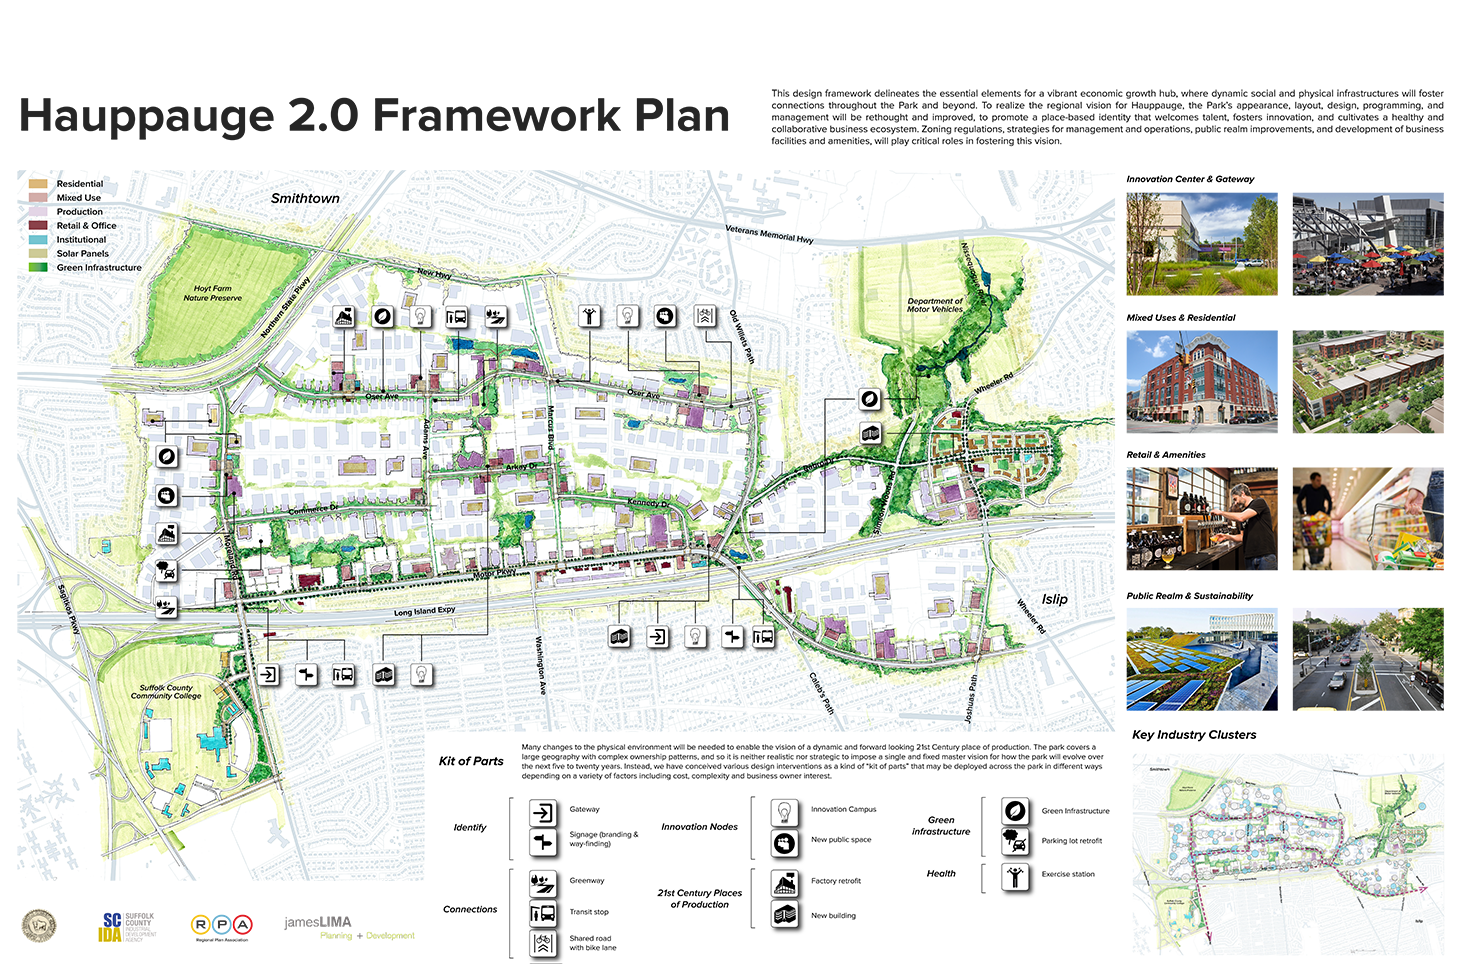 Hauppaugh_Poster Framework Illustrative Plan_resized